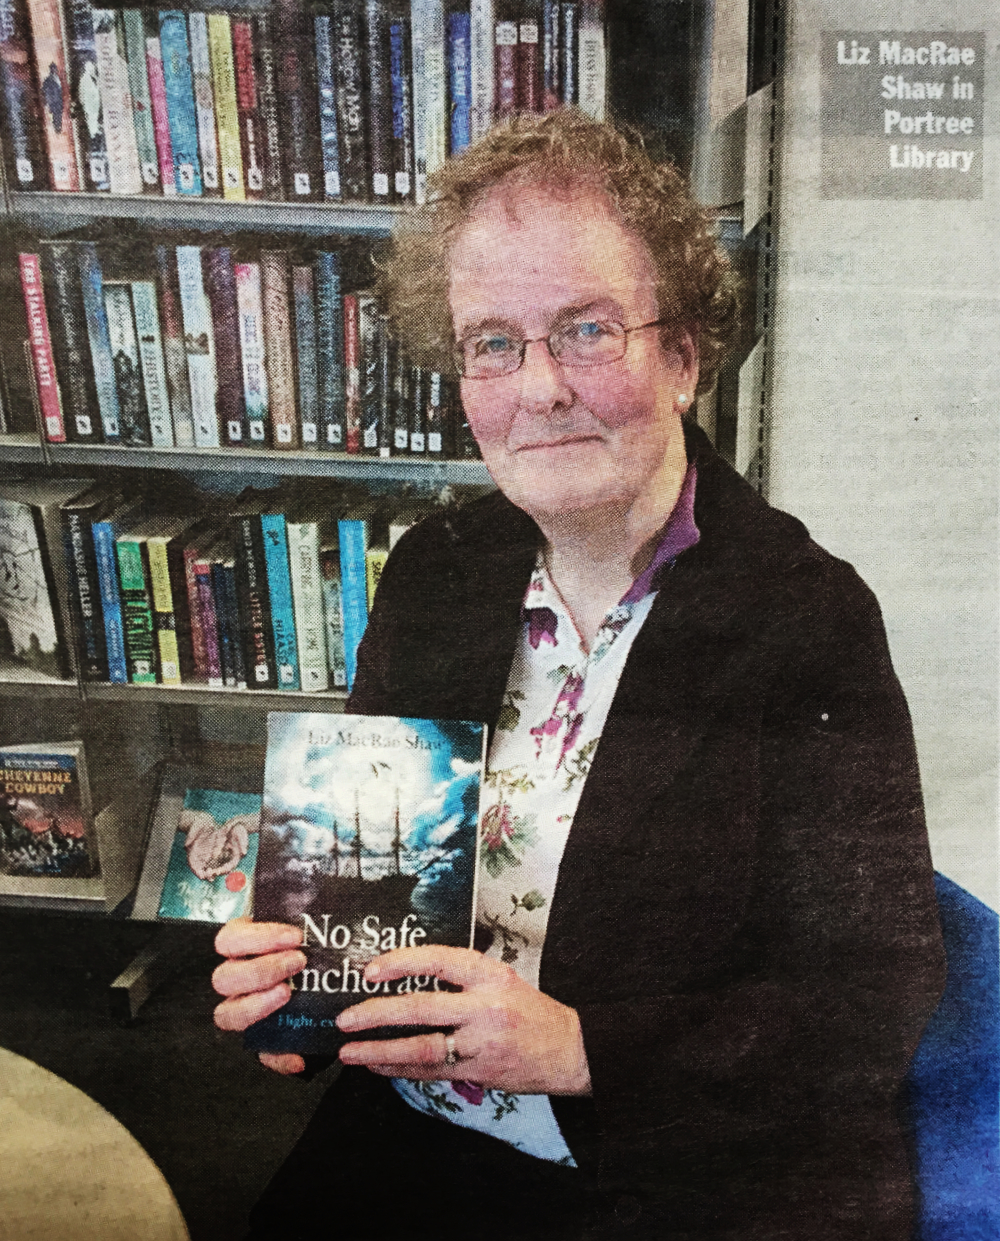 Liz MacRae Shaw at the 2017 Skye Book Festival